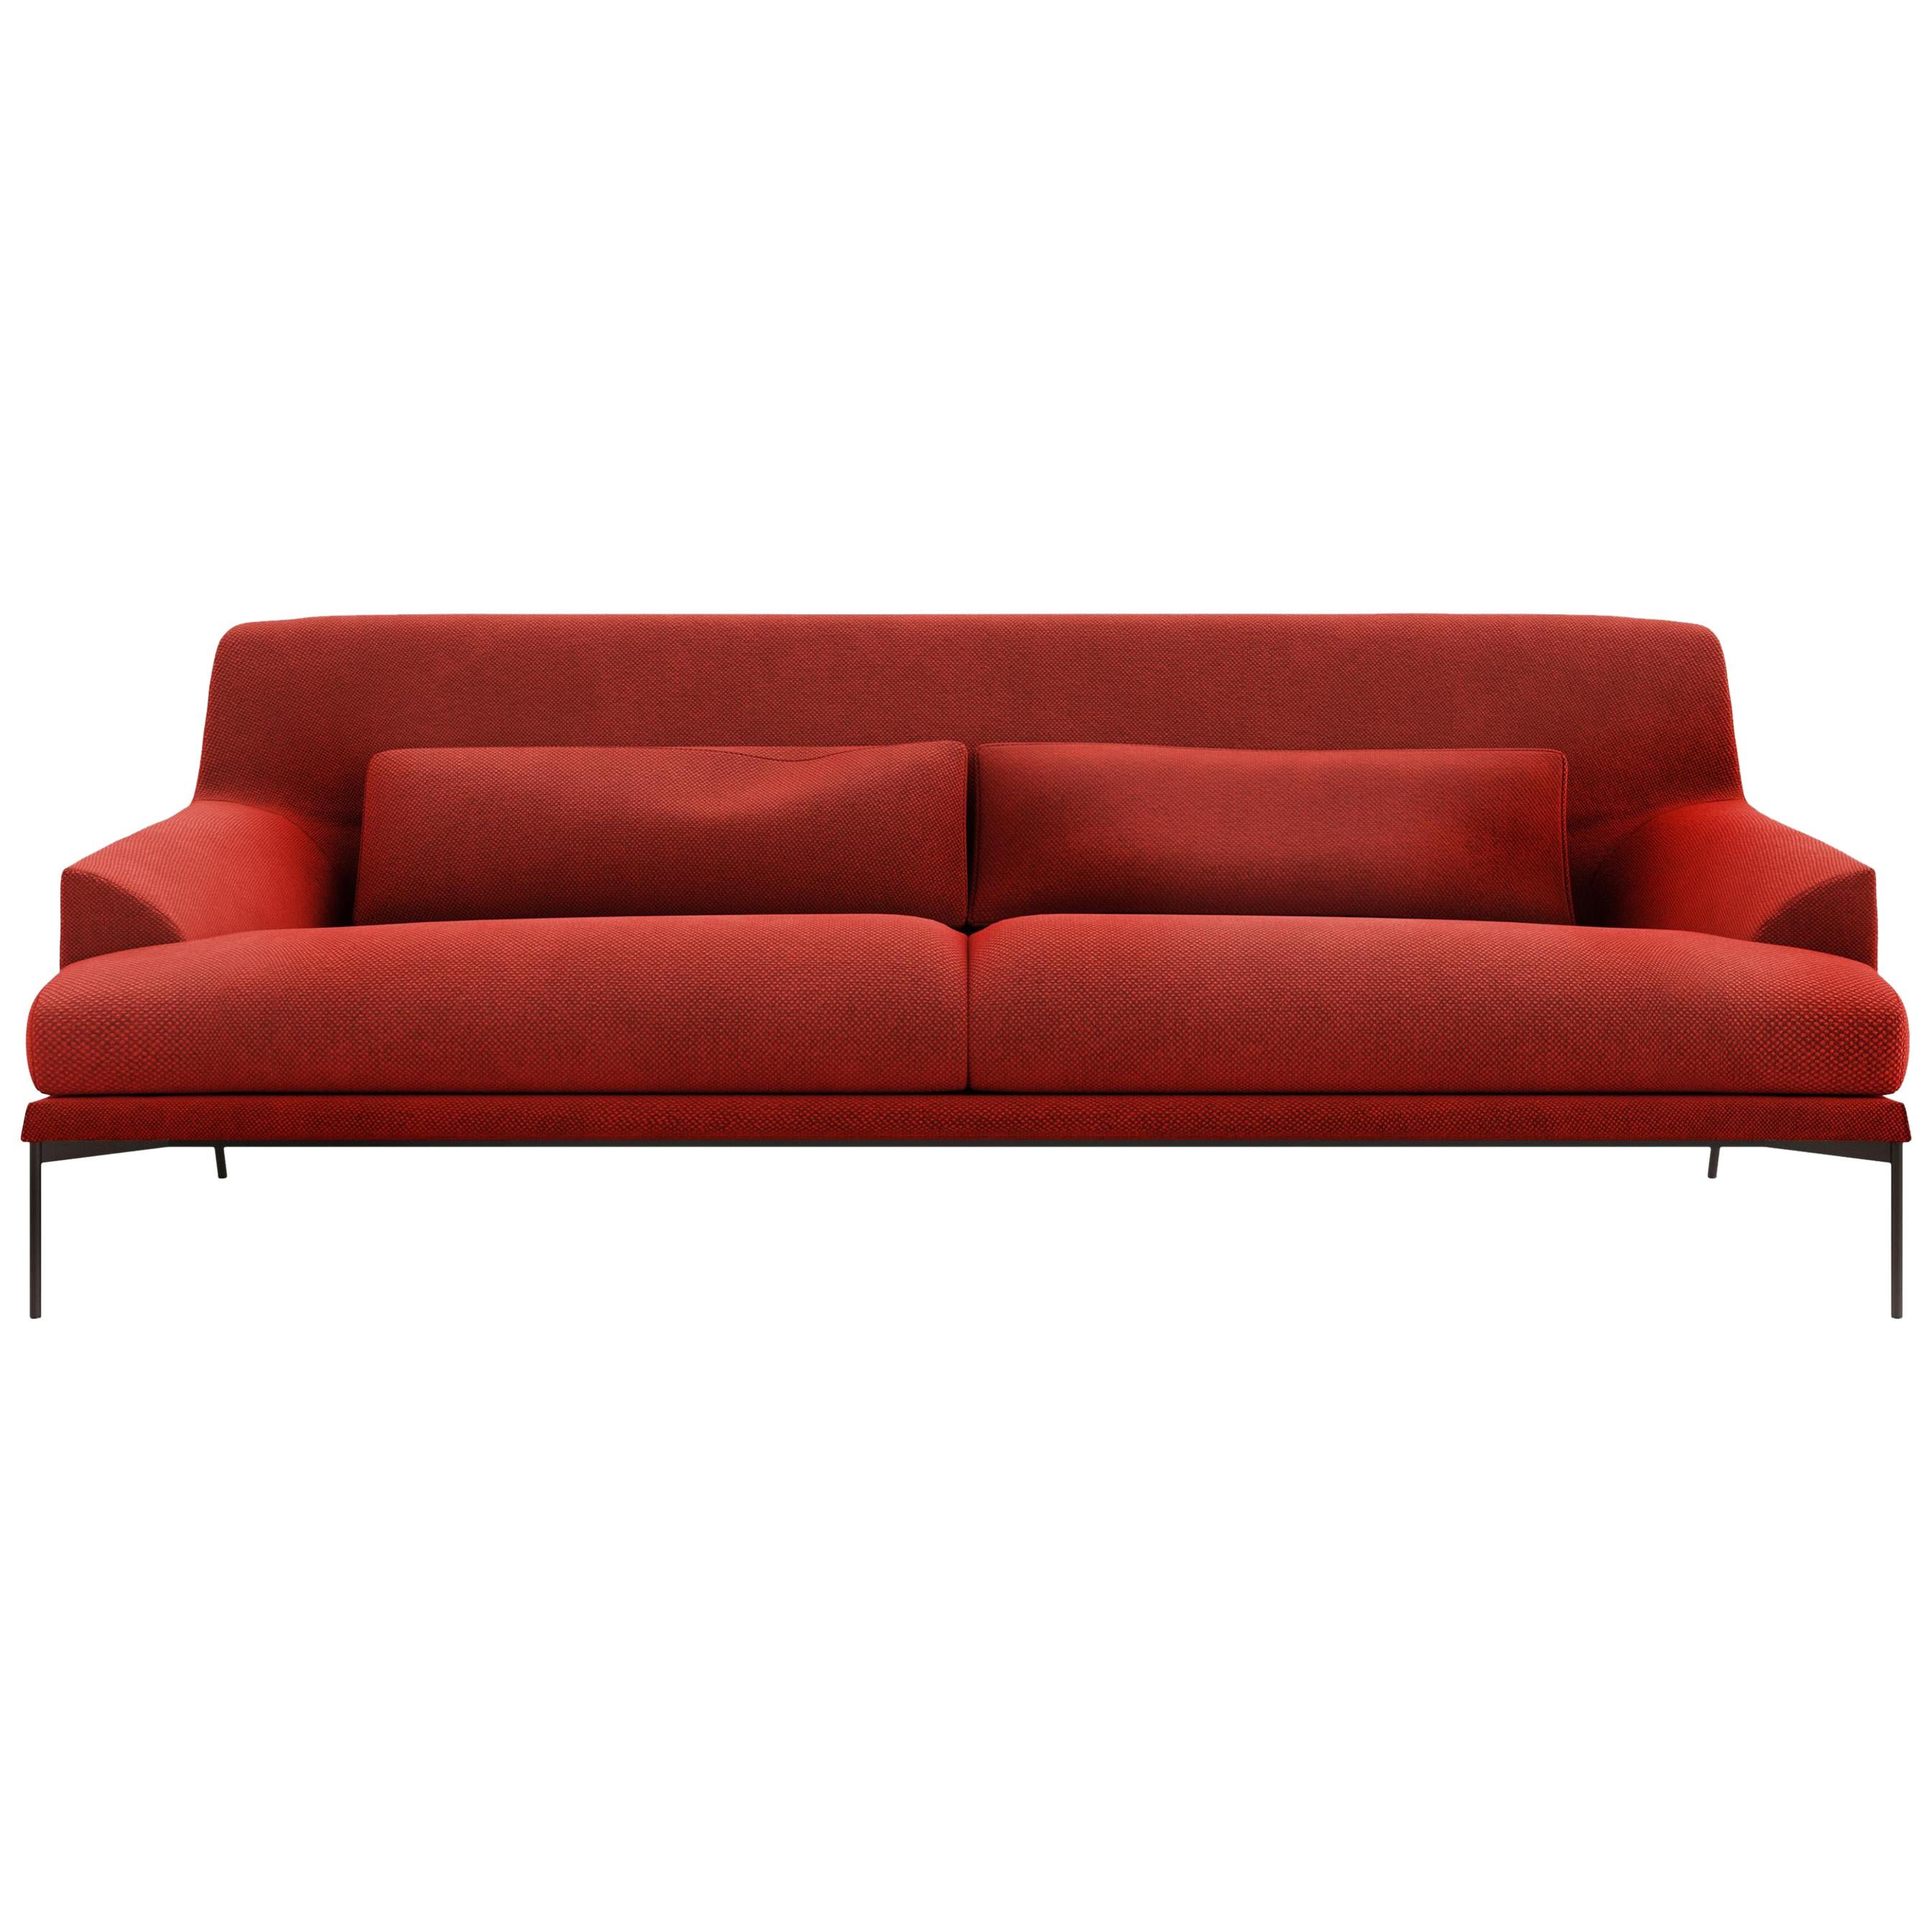 Anpassbares Montevideo-Sofa, entworfen von Claesson Koivisto Rune